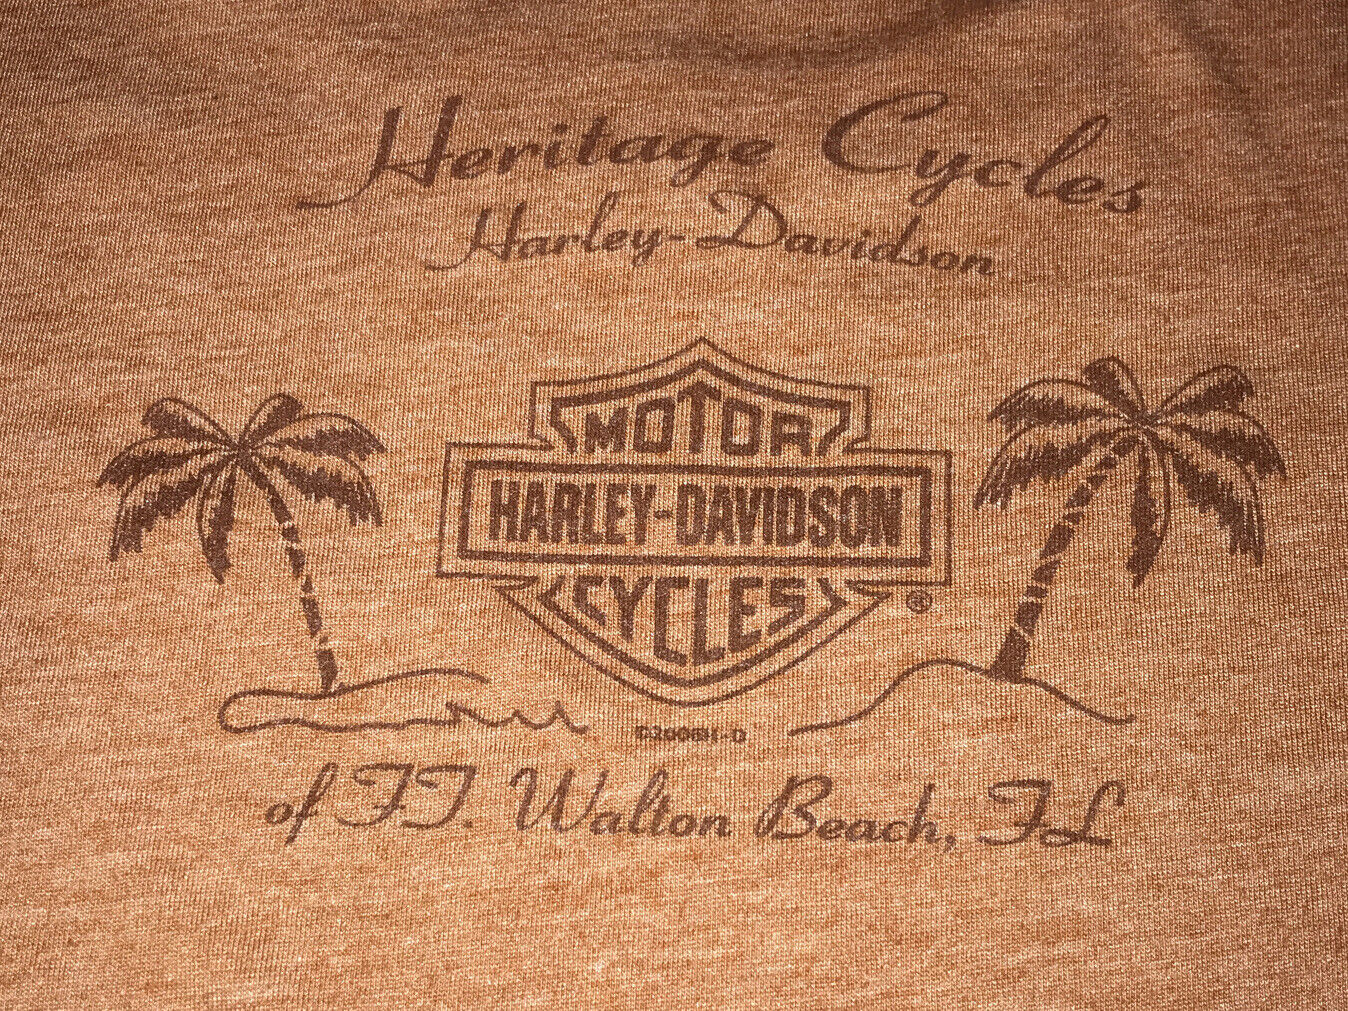 Harley Davidson Heritage Cycles Of FortWaltonBeach, FL Women’s Large Shirt